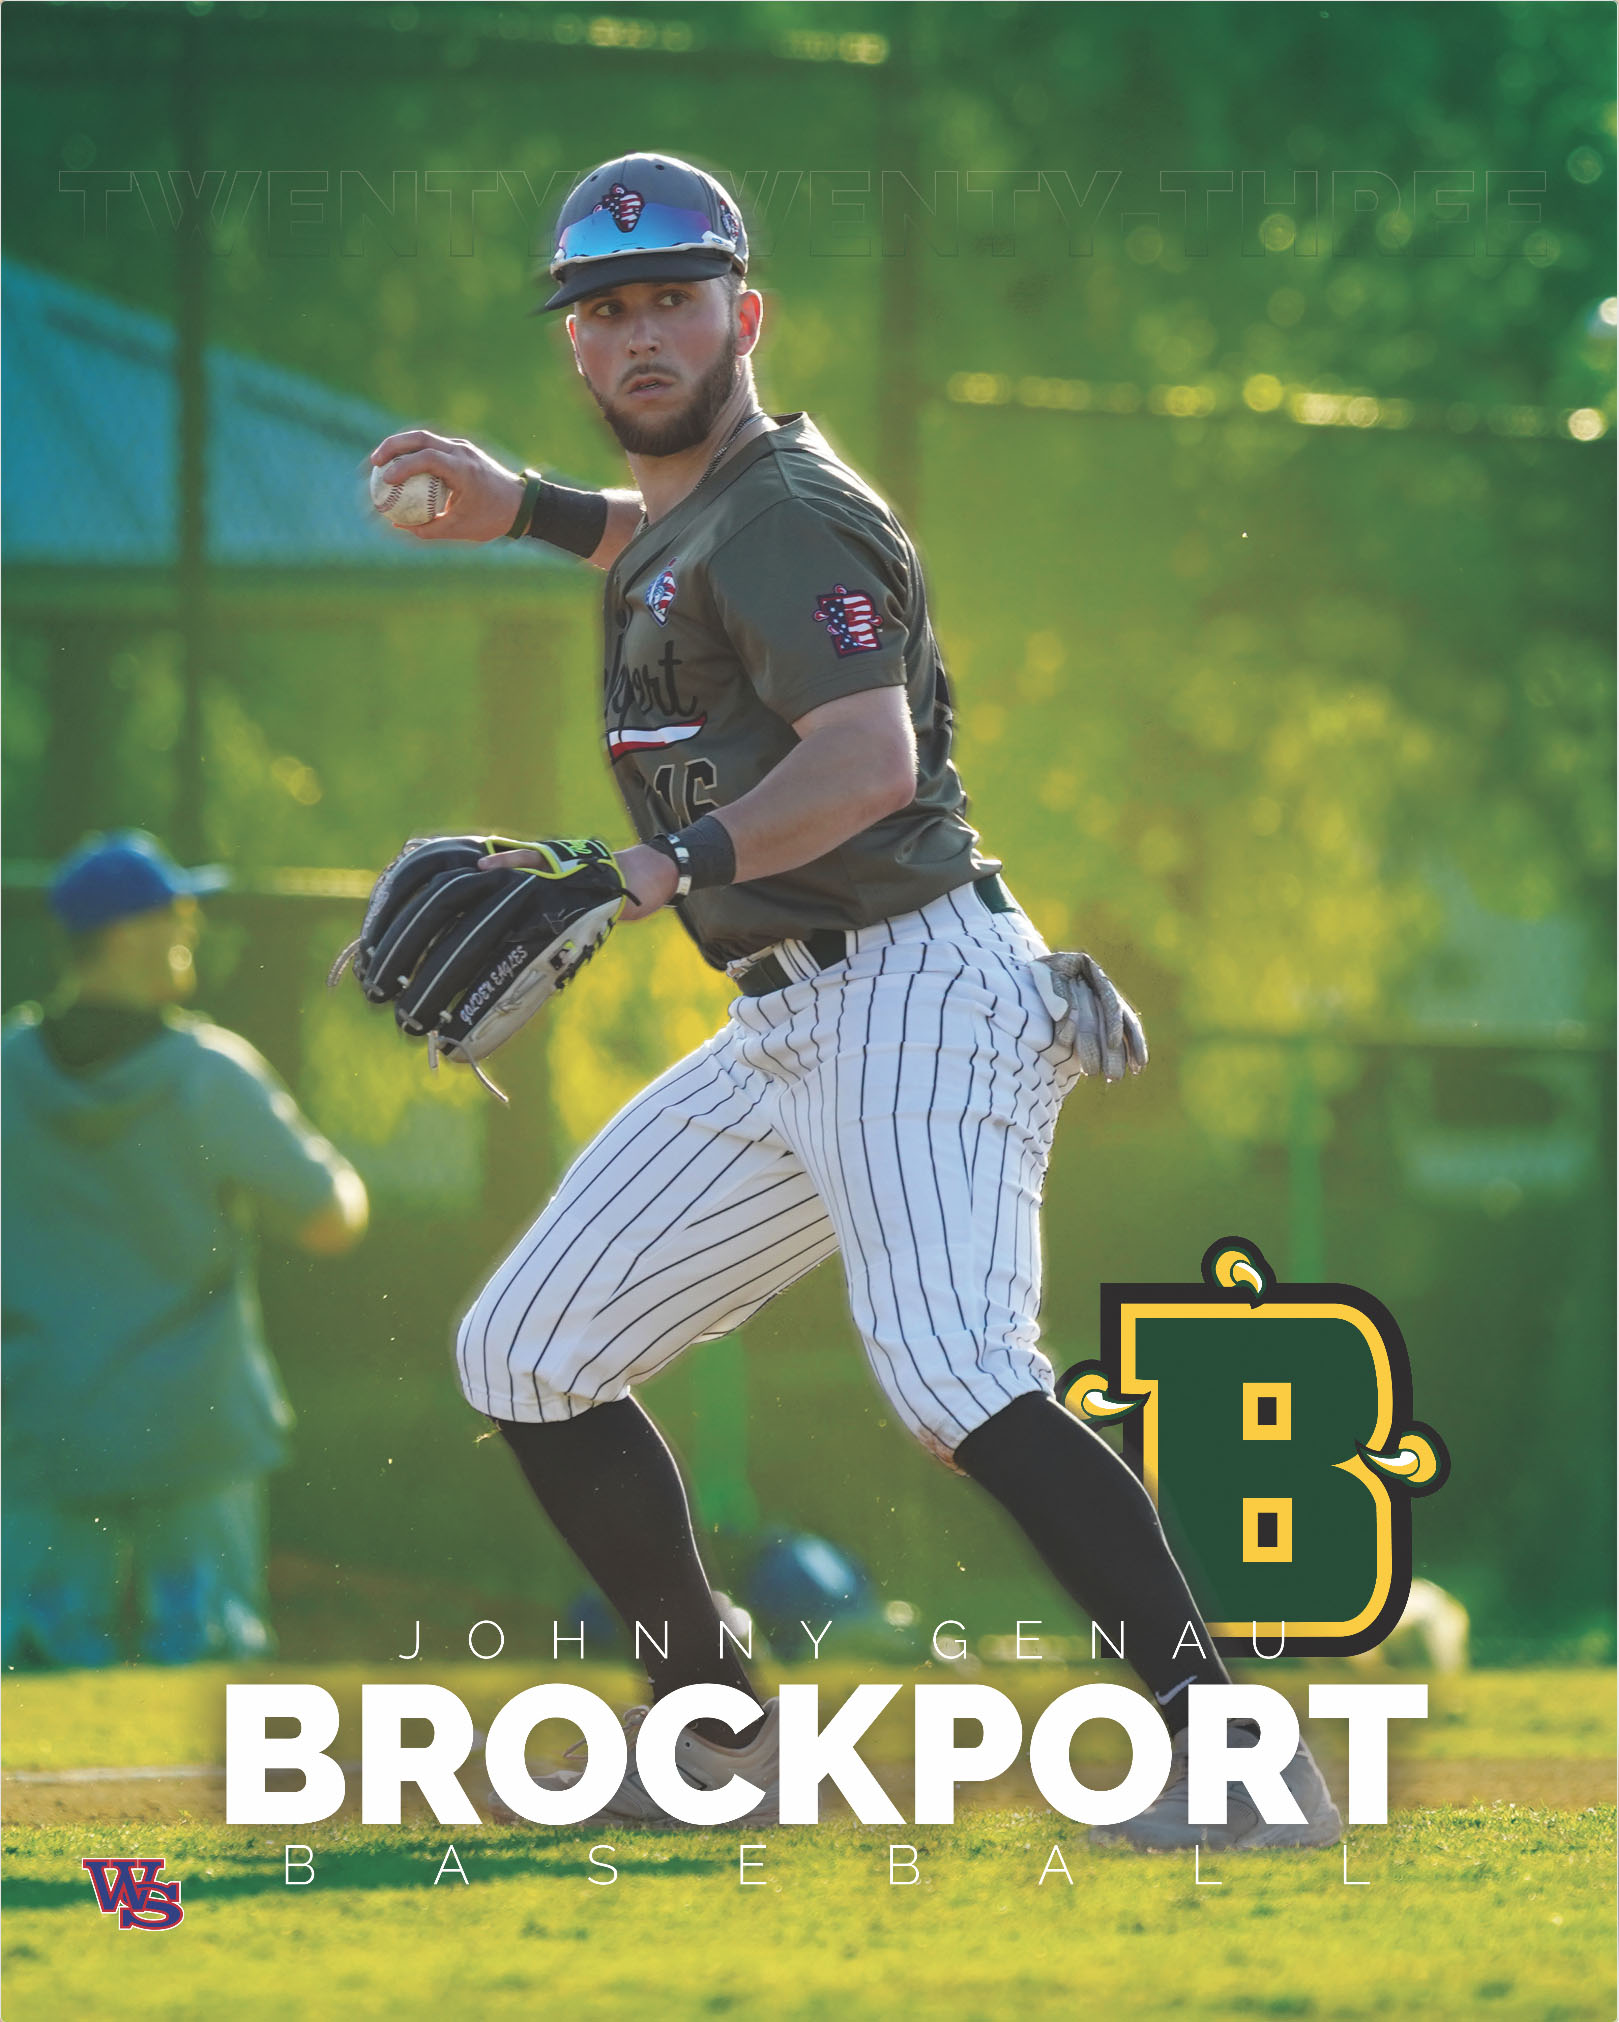 Brockport Baseball Johhny Genau Poster